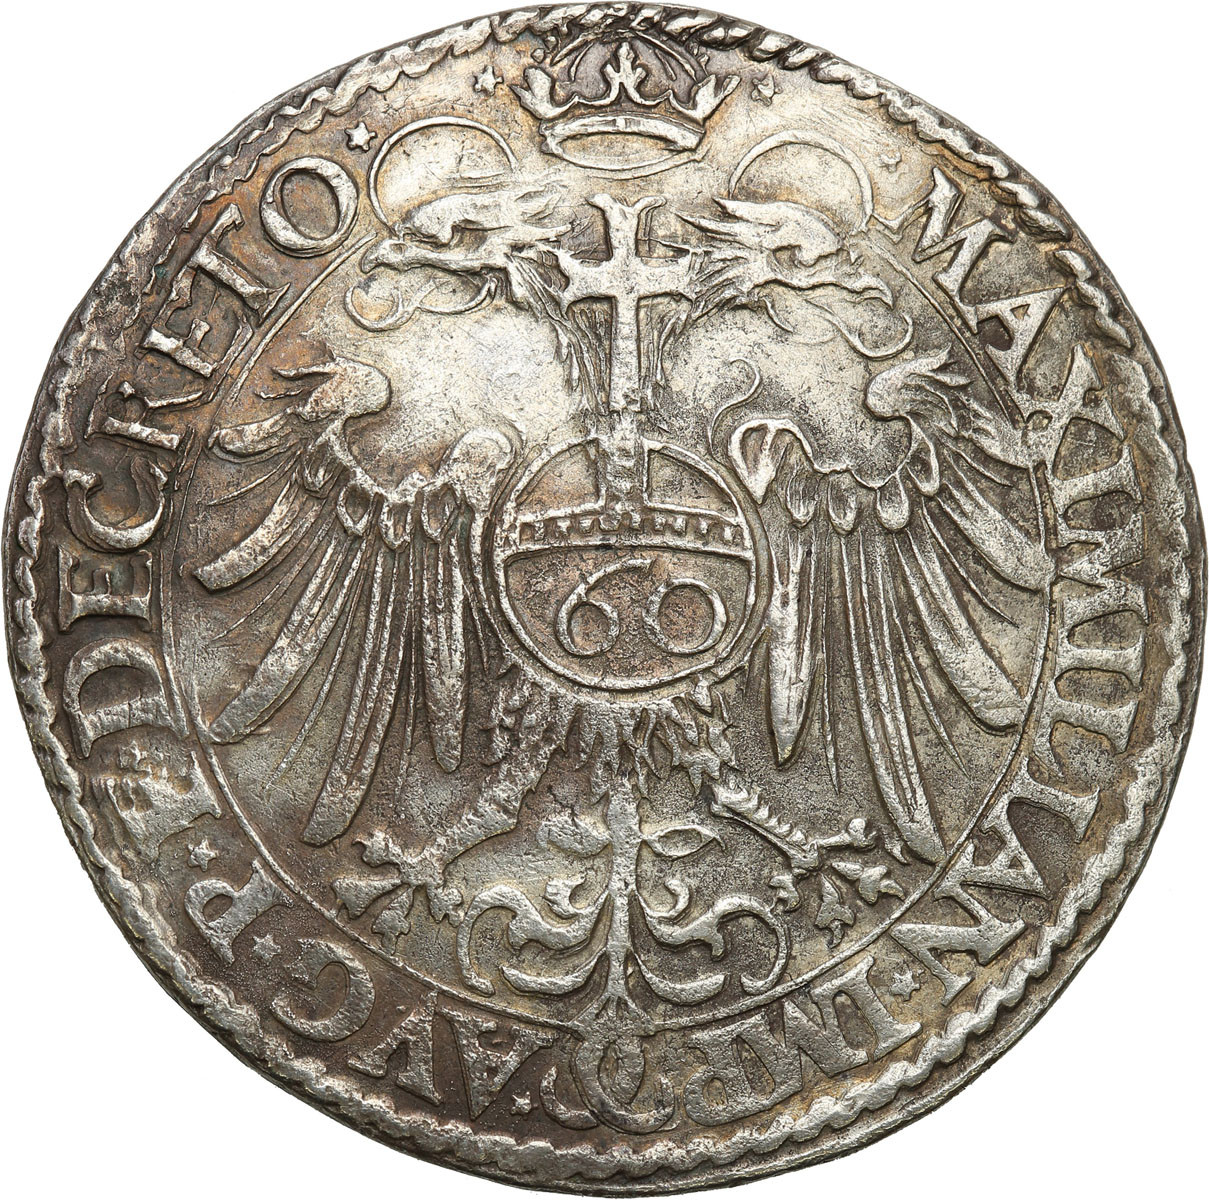 Niemcy, Nürnberg. Guldentaler (60 krajcarów) 1565